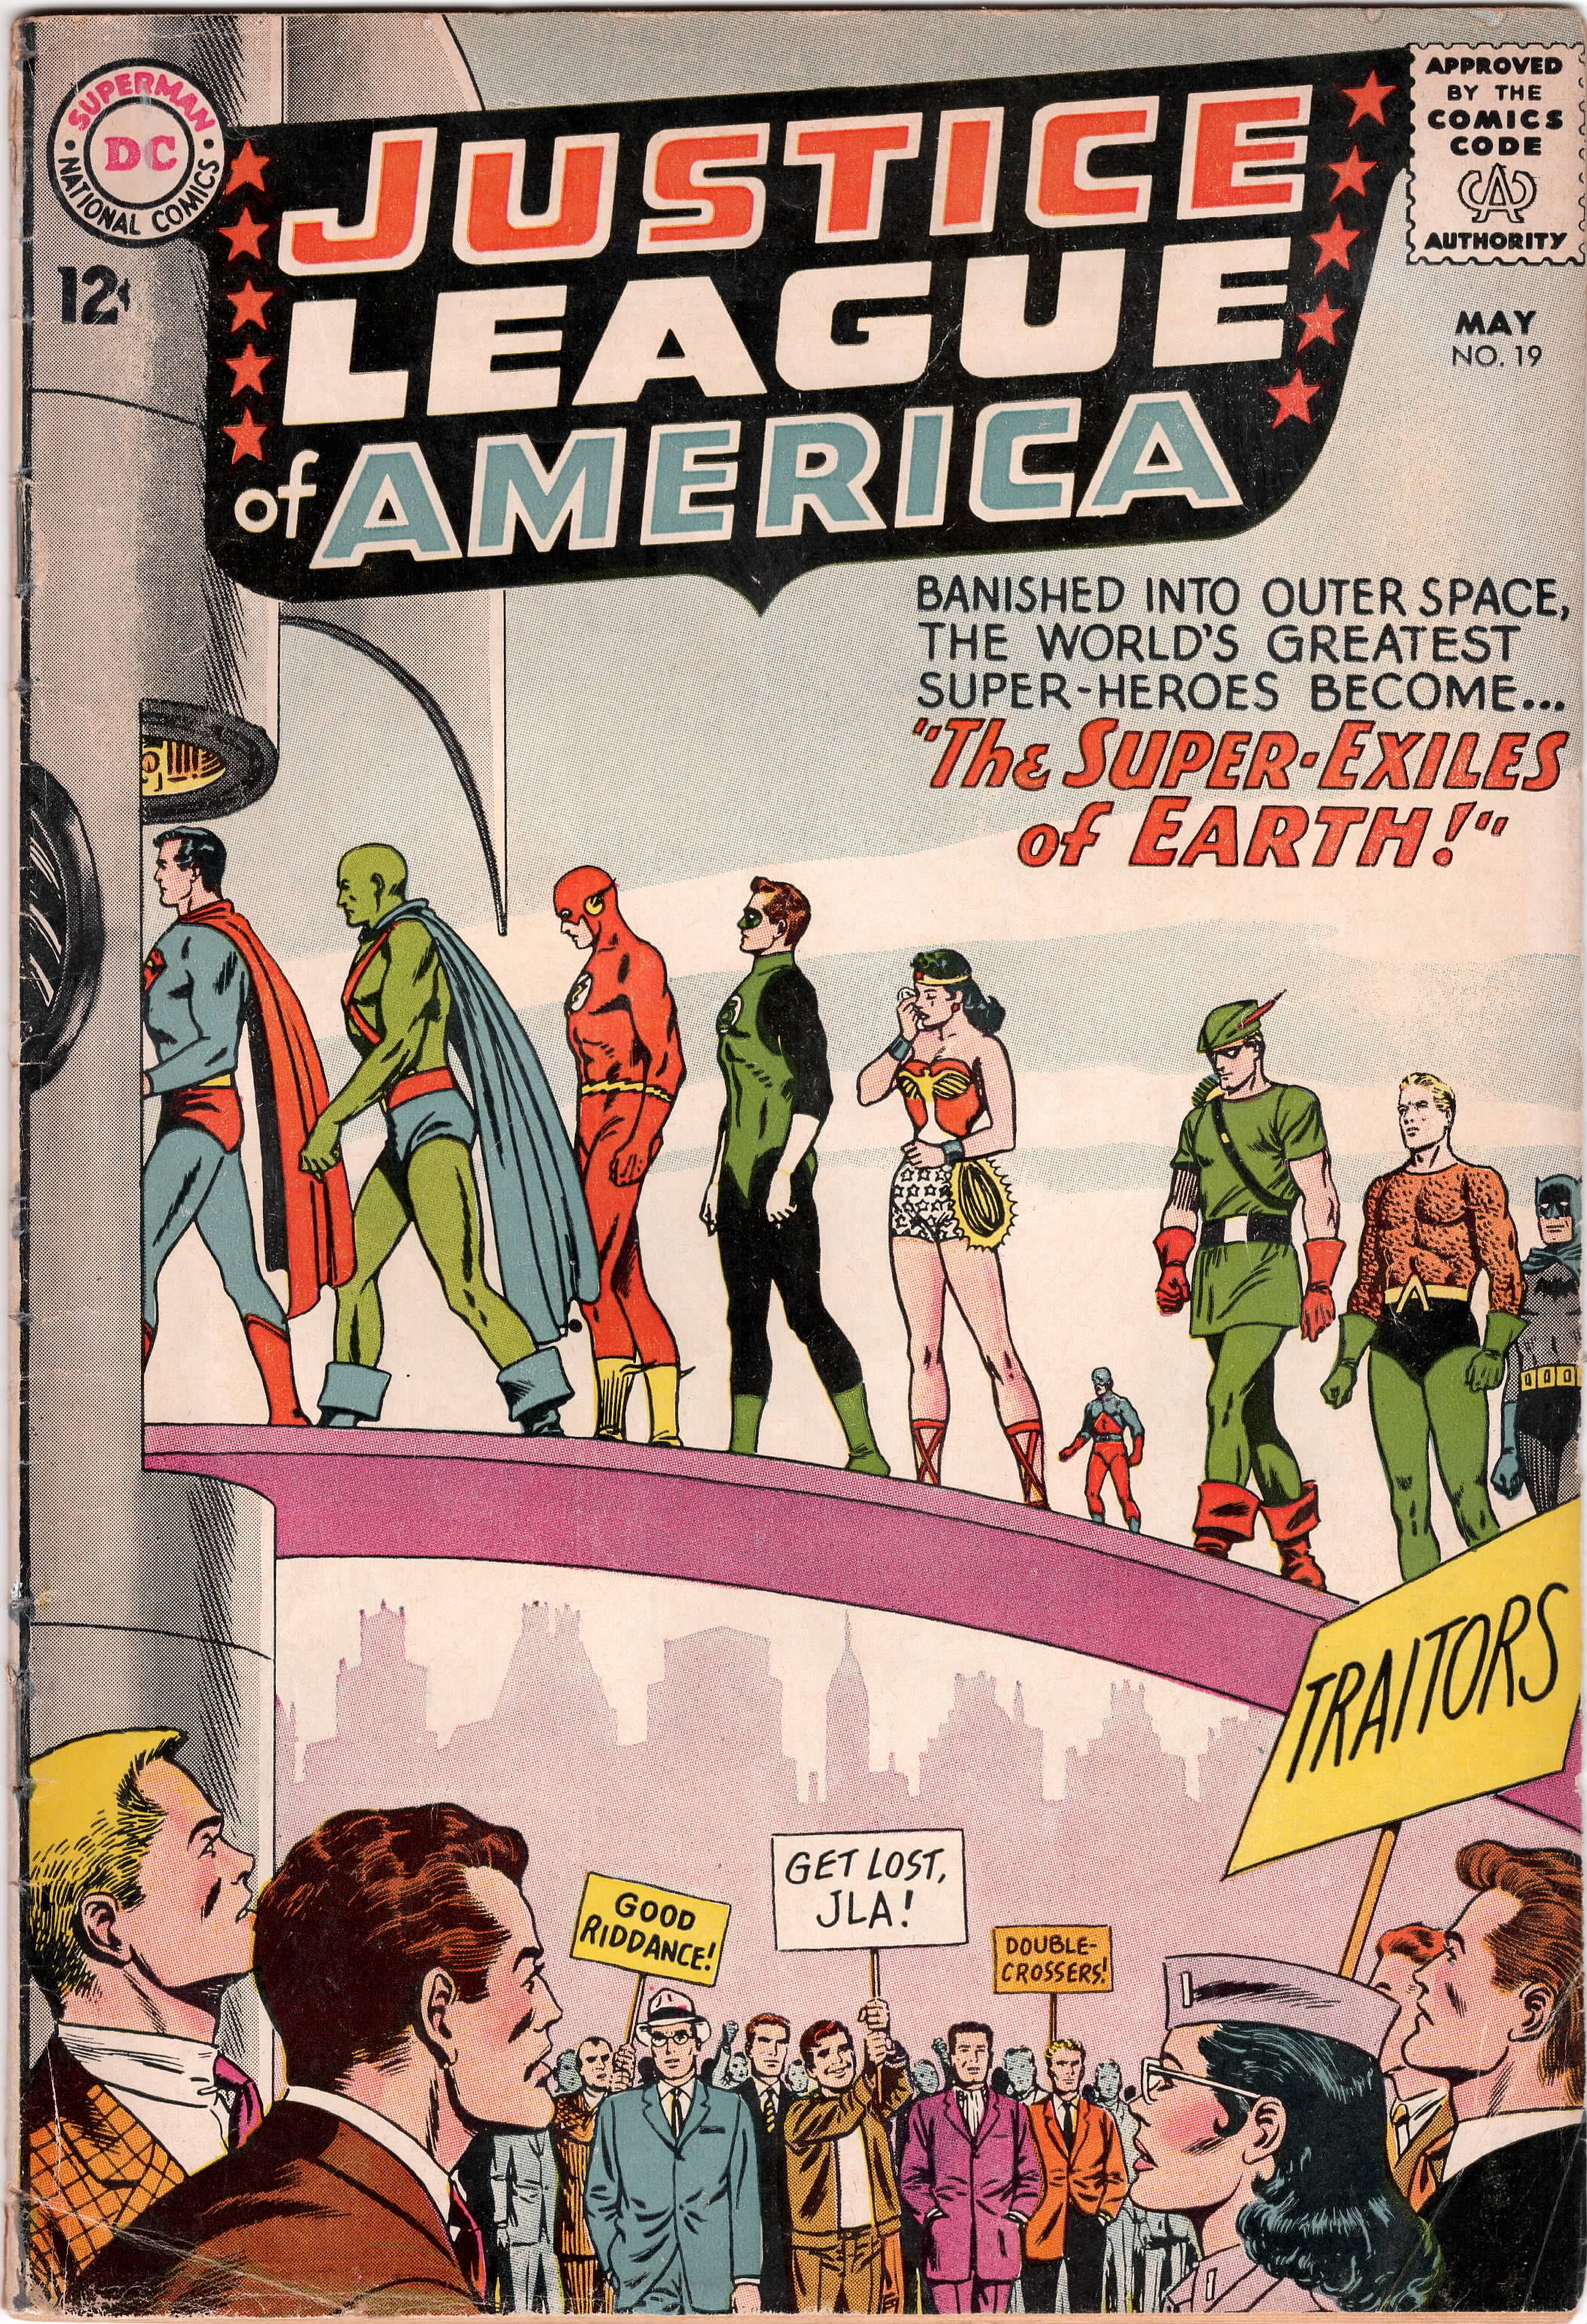 Justice League of America #019